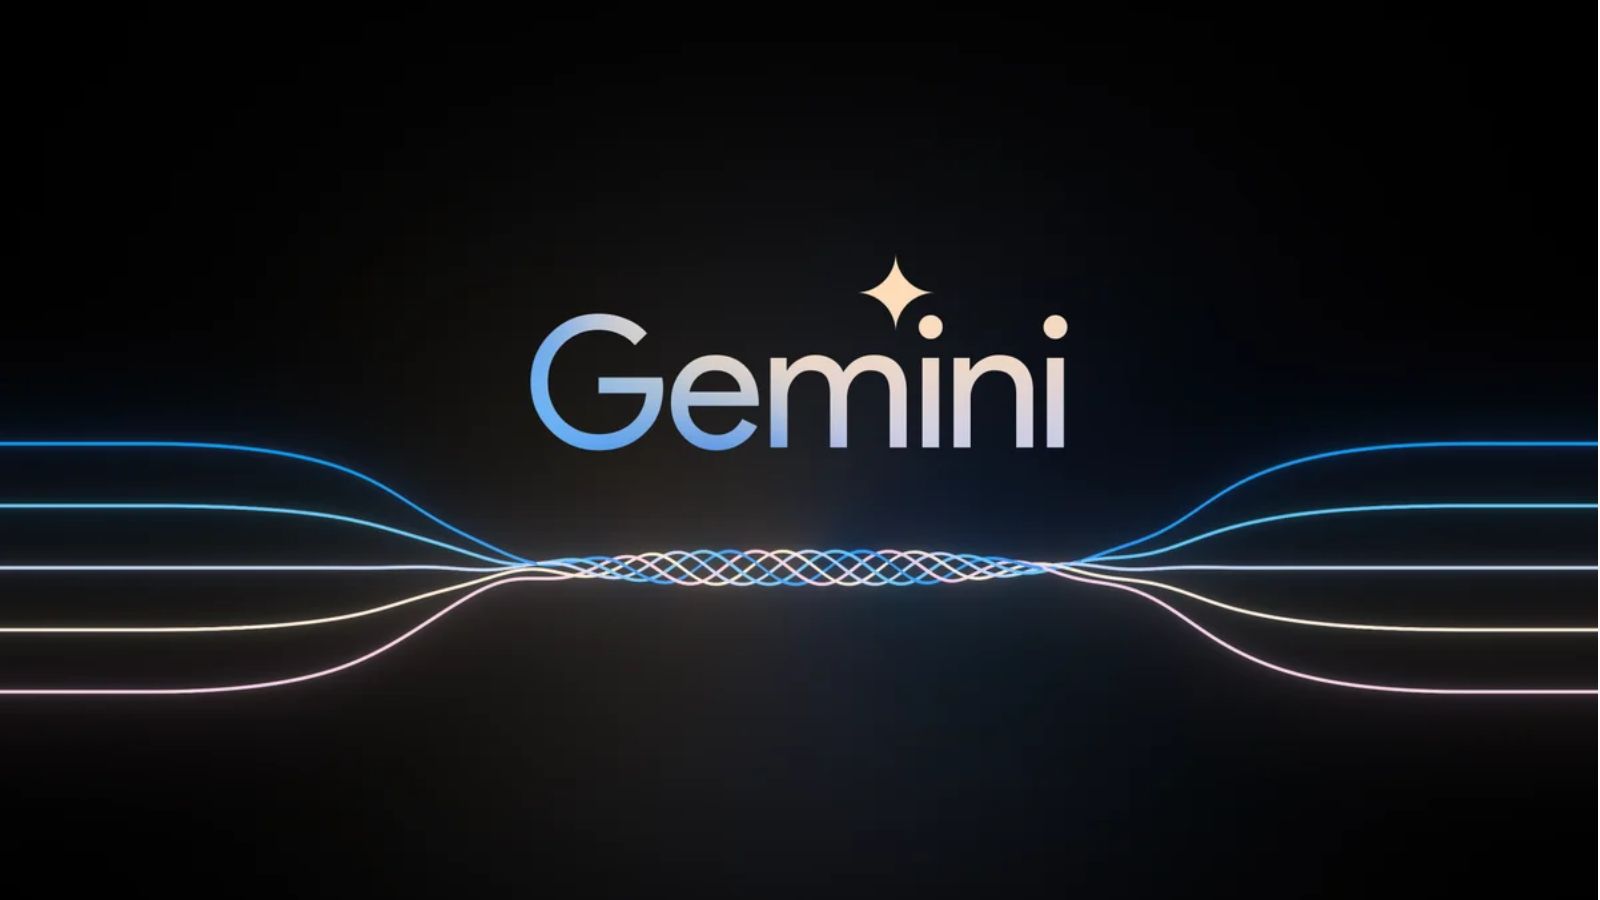 Google Gemini | Google Gemini image generator